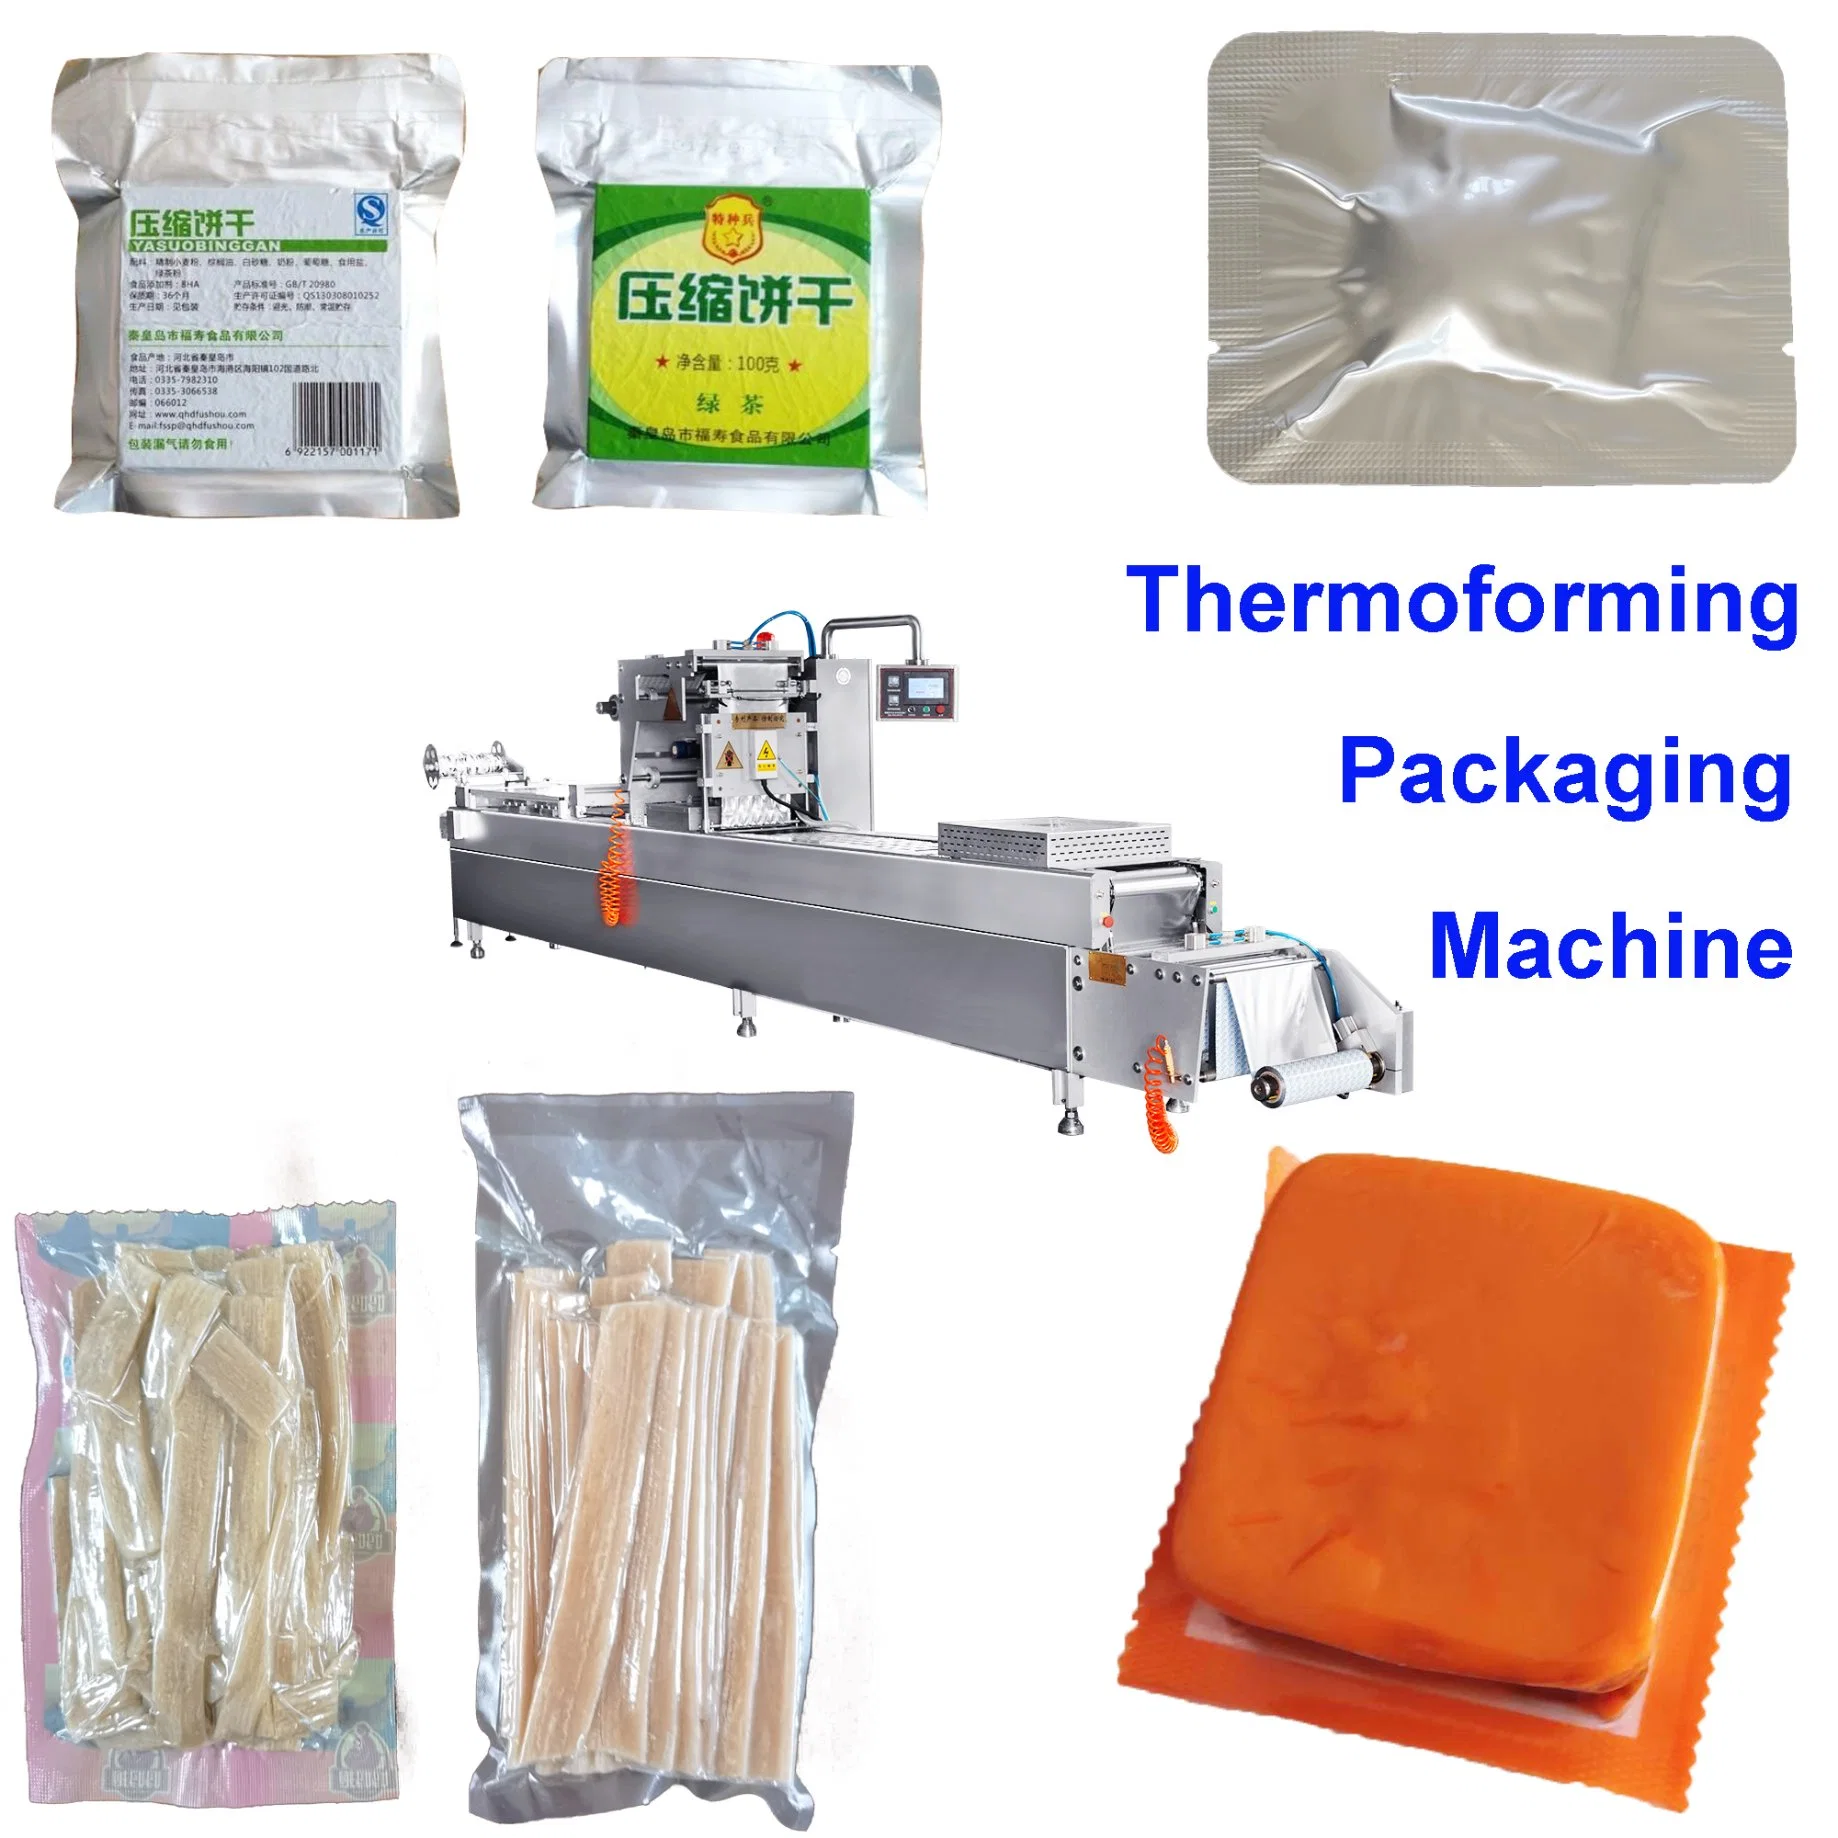 Flexible/Rigid Film Thermoforming Packaging Machine